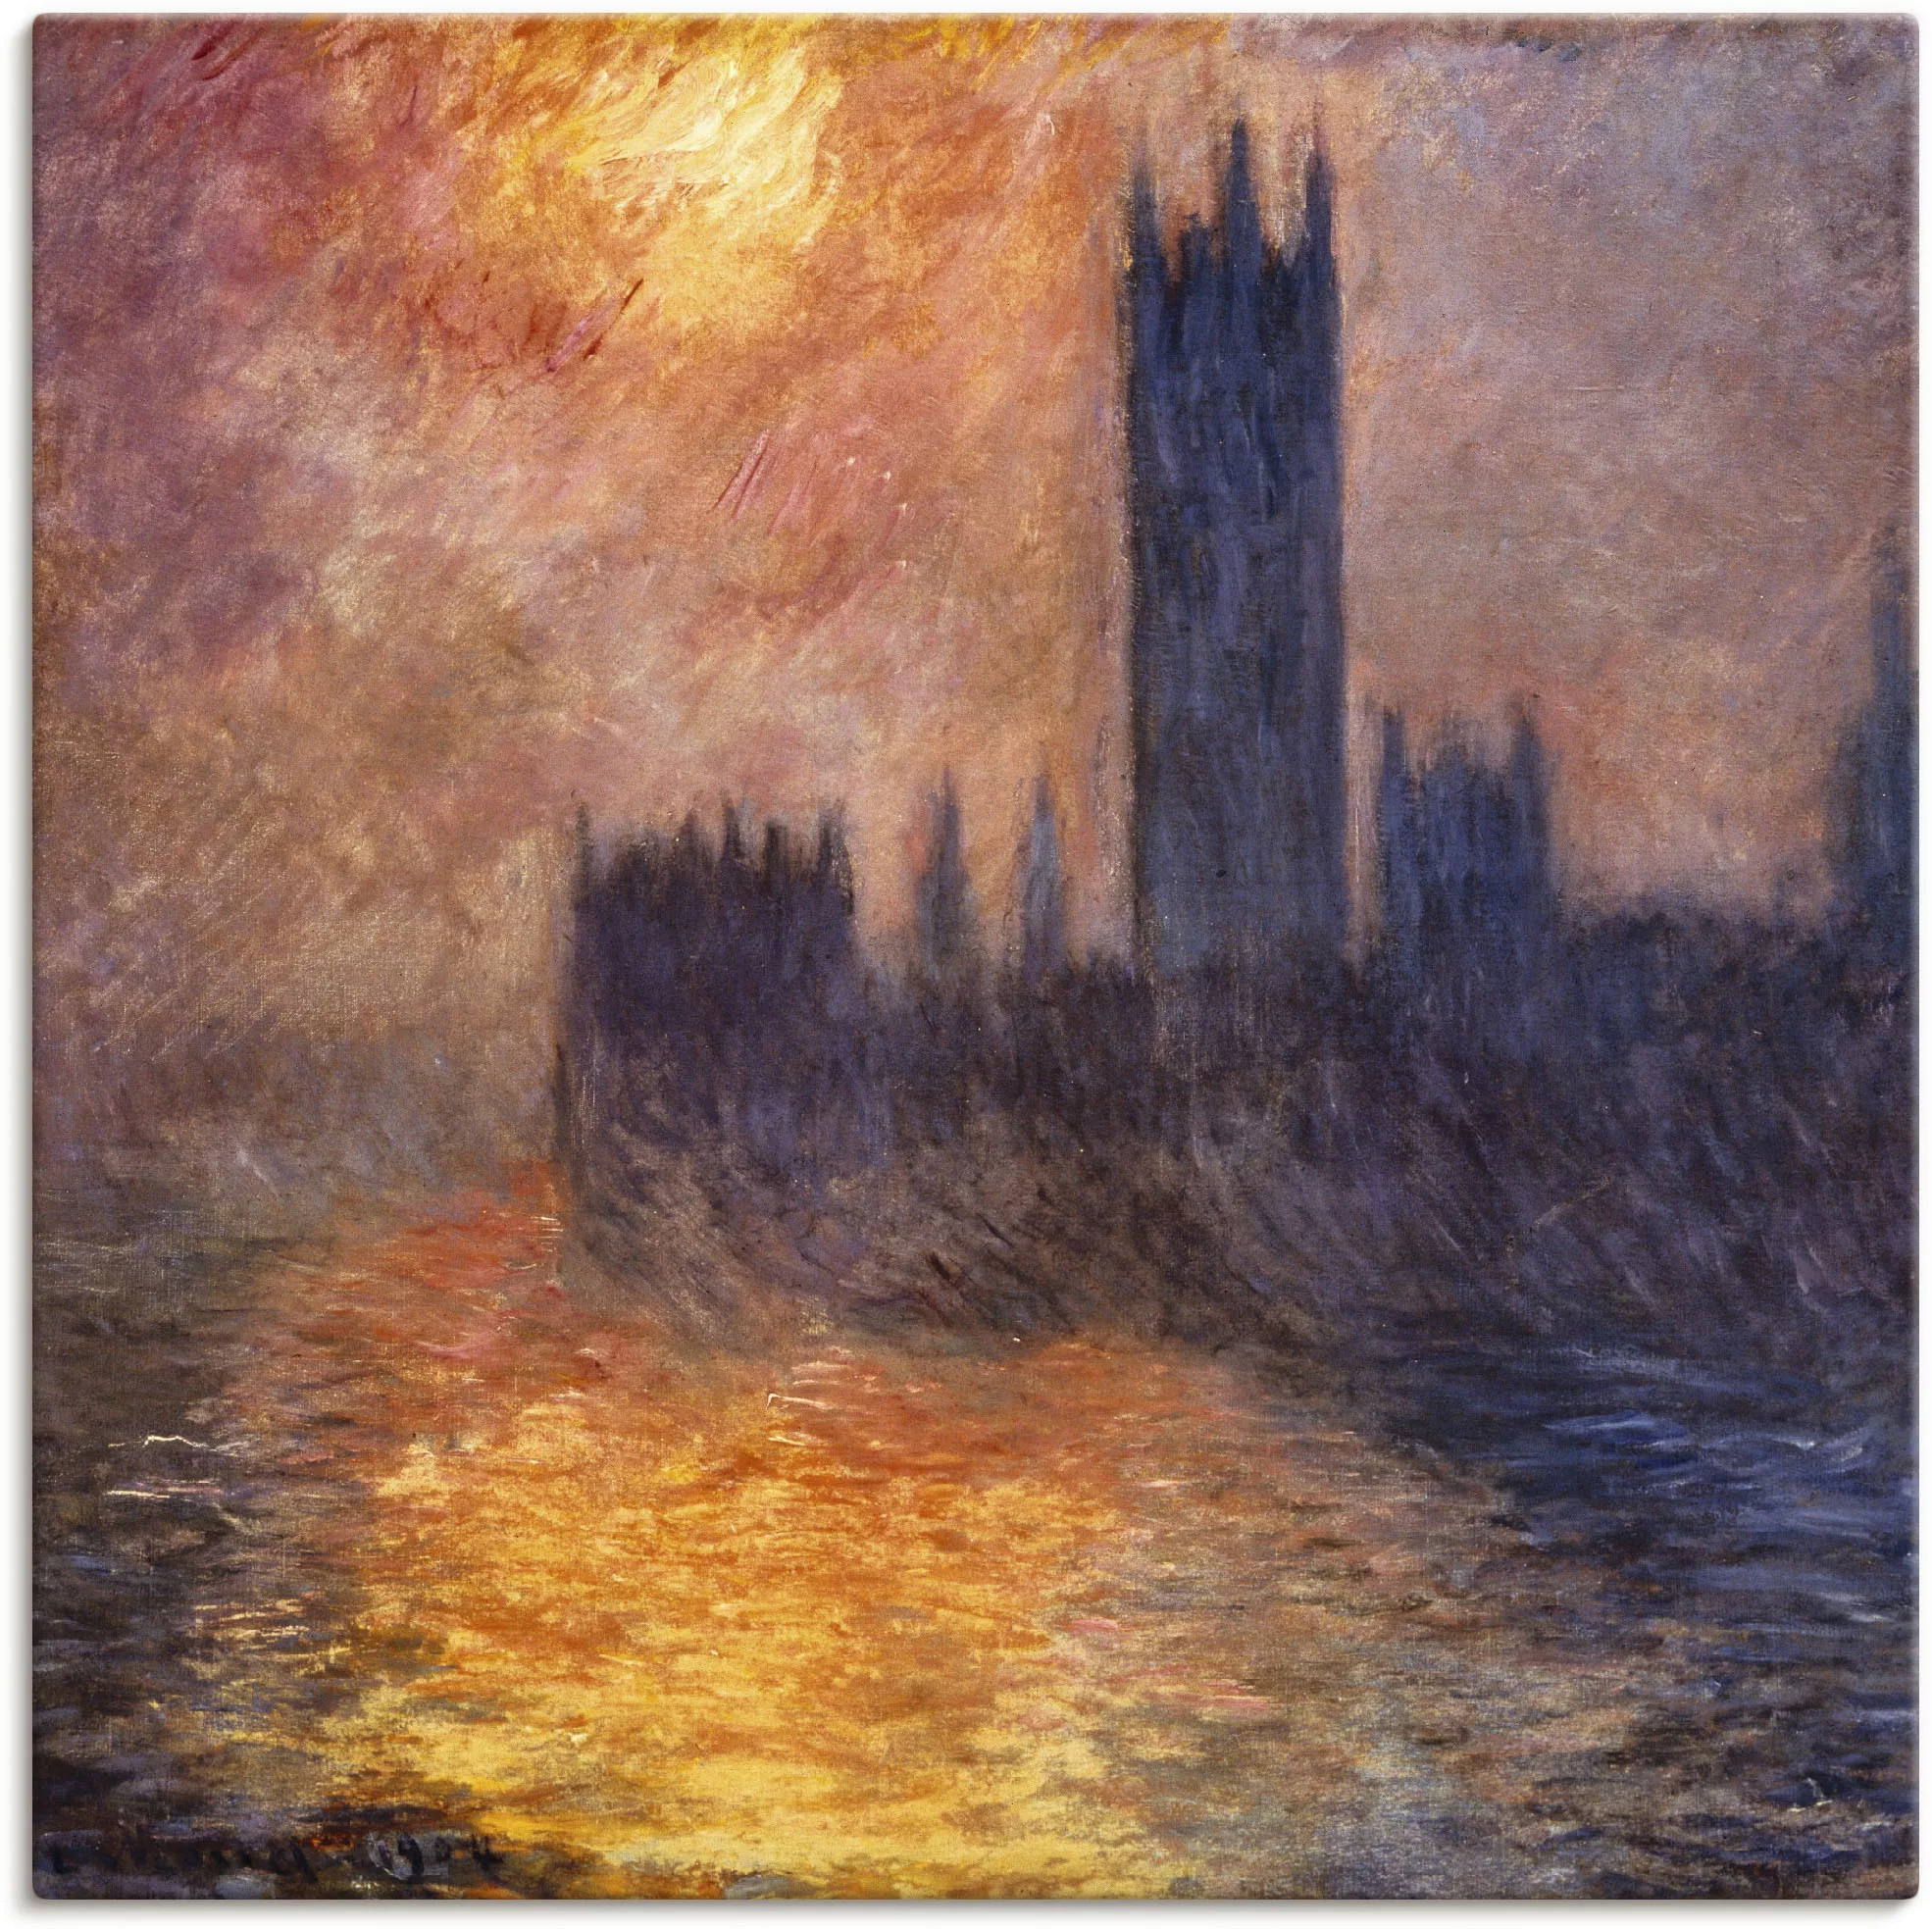 Artland Leinwandbild "Parlament in London bei Sonnenuntergang", Sonnenaufga günstig online kaufen